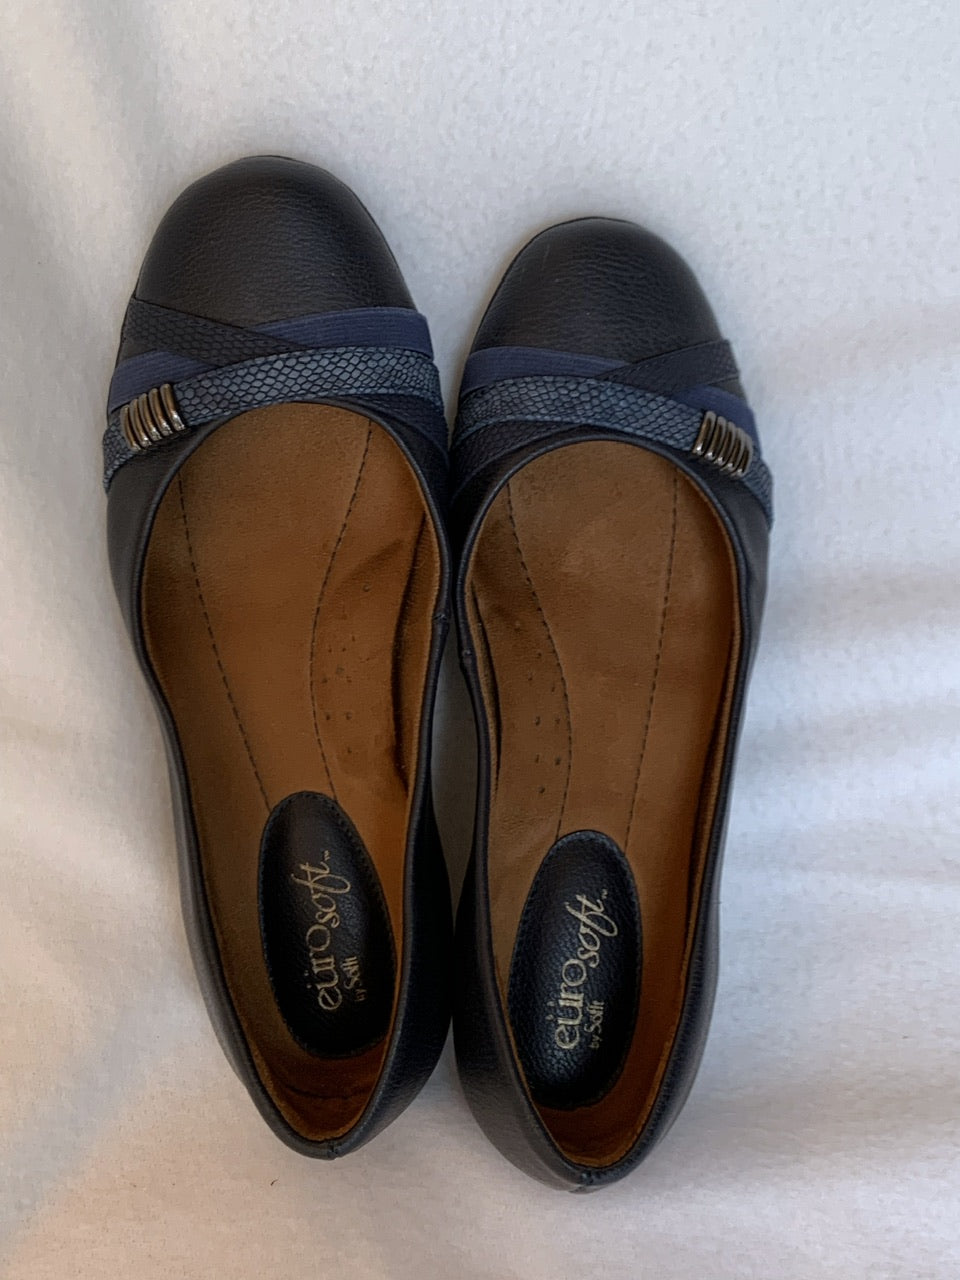 Size 7 Women’s Euro Soft Navy Blue Flats / Shoes